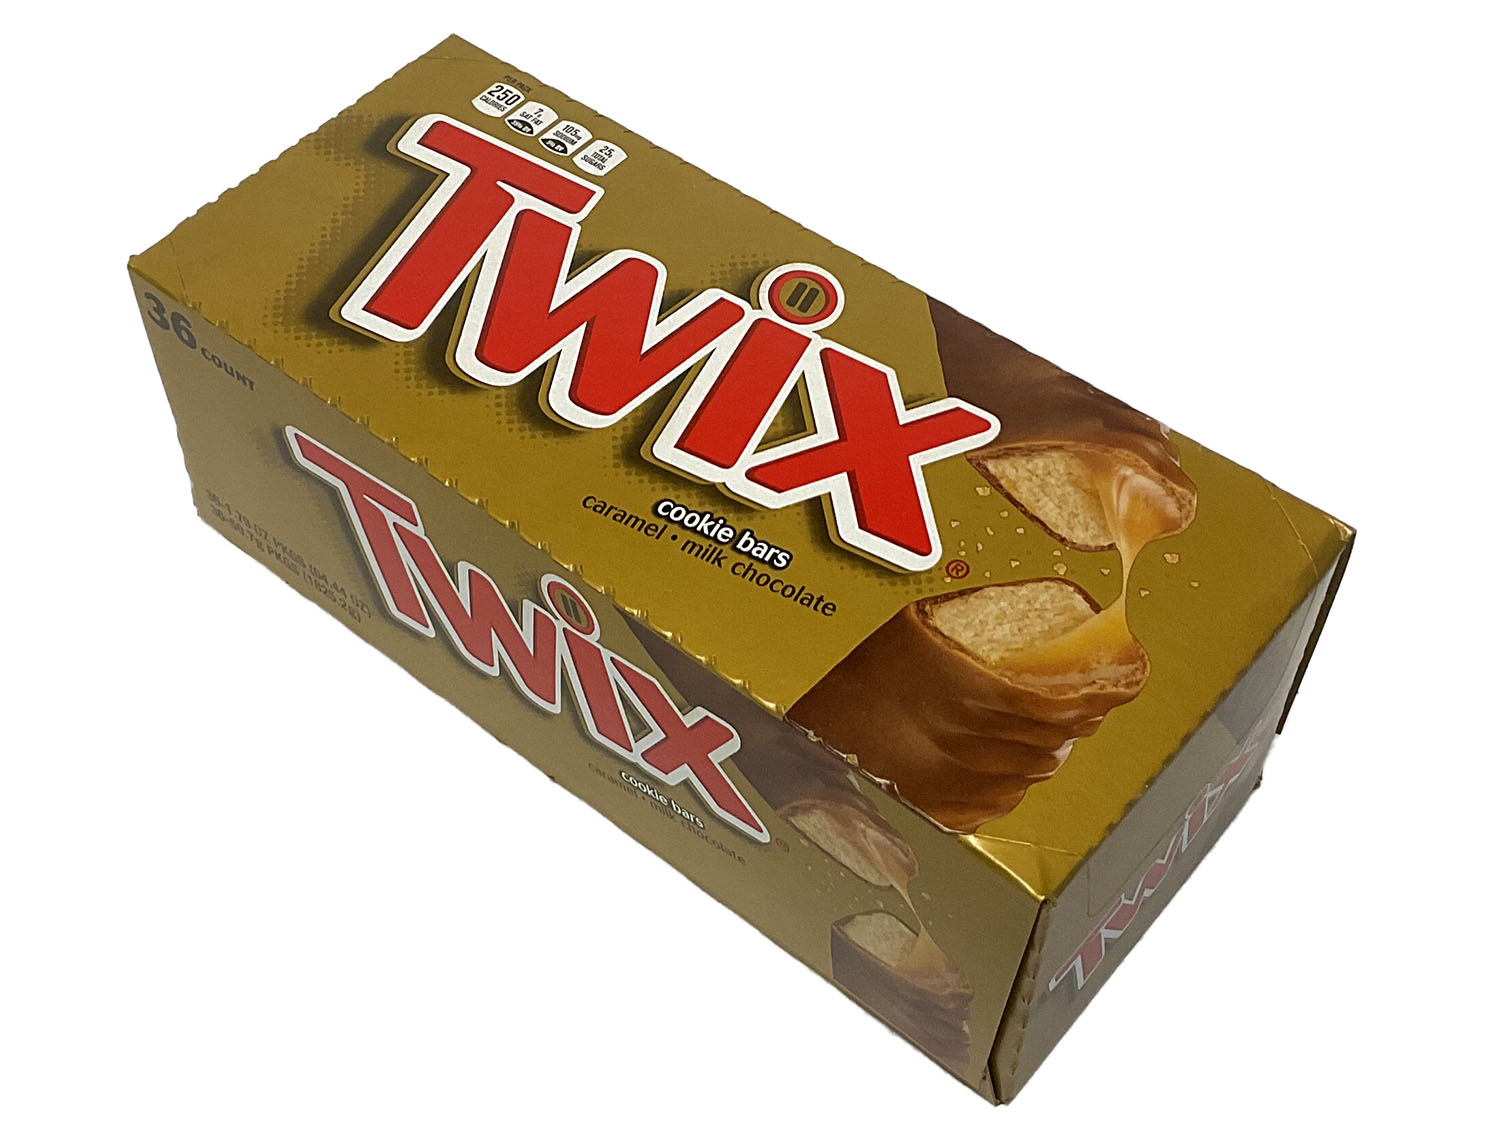 Twix Single Cookie Bars, 36 ct